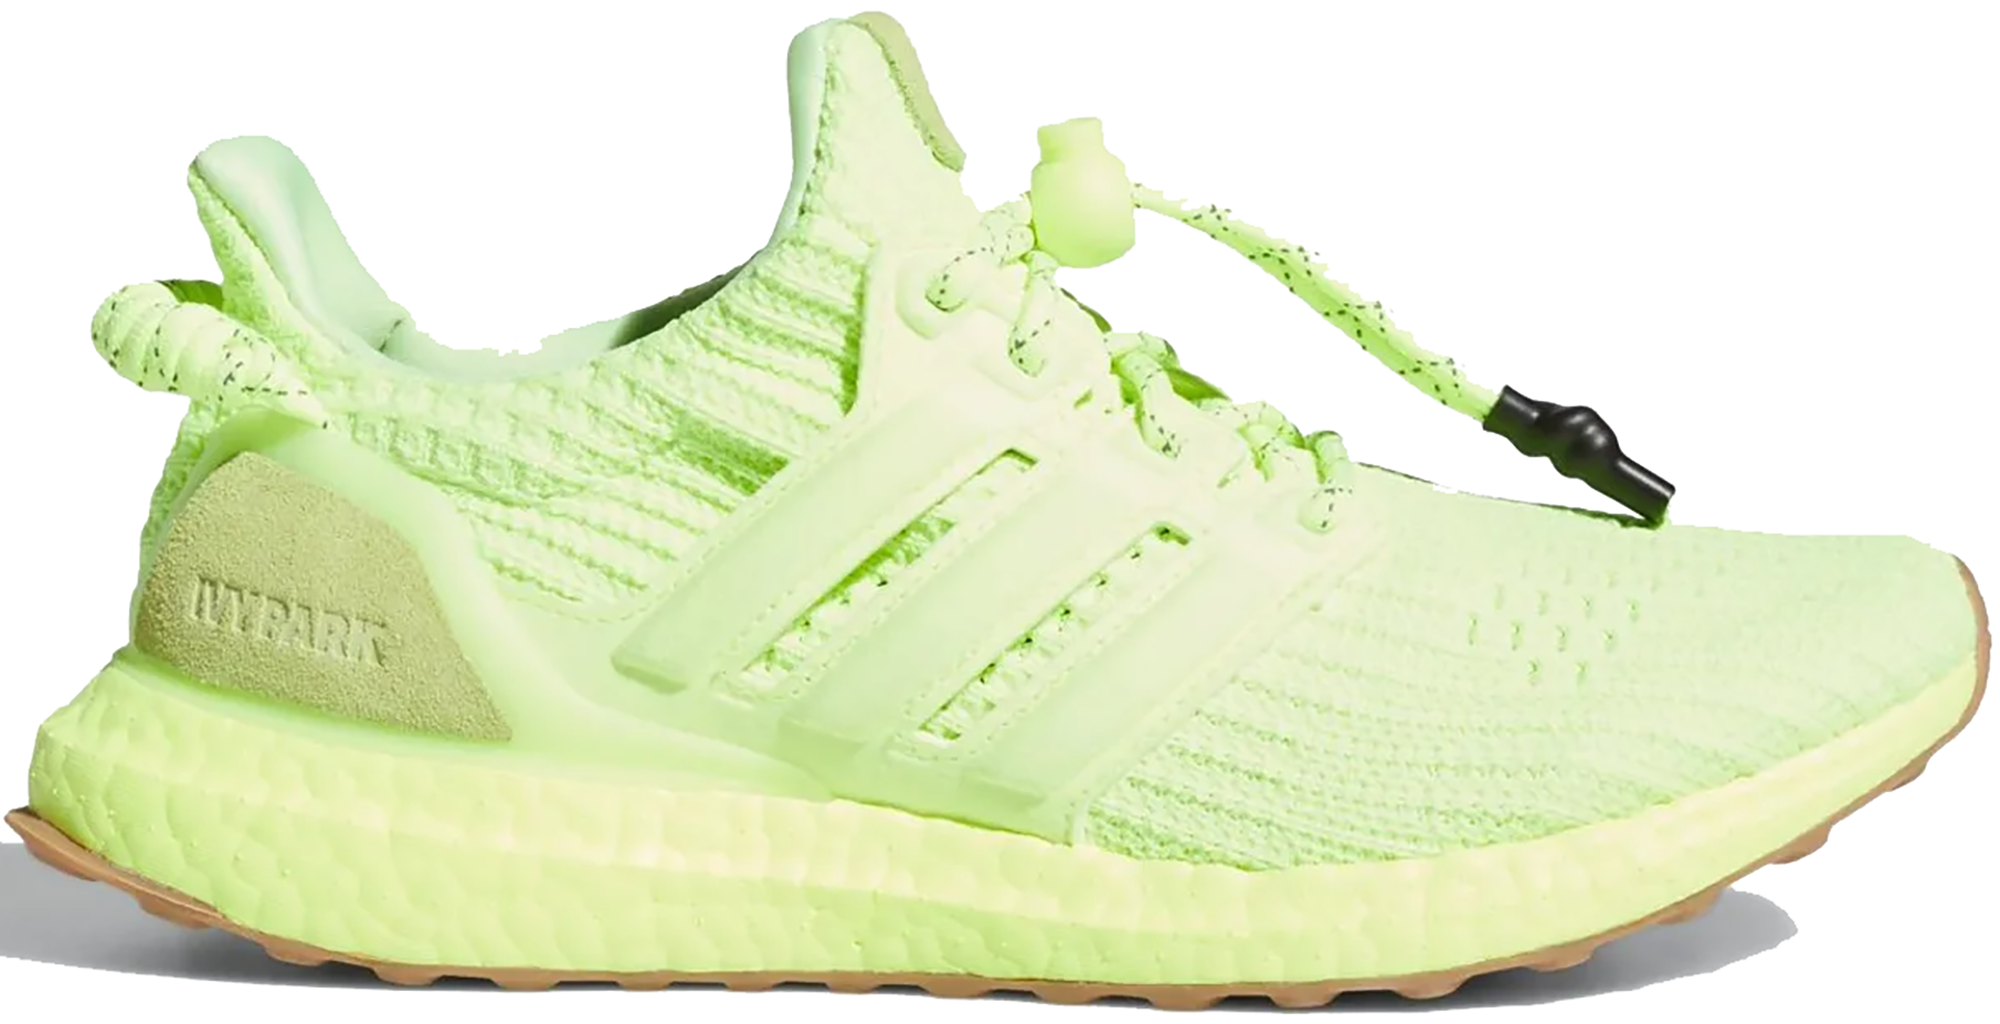 Adidas x Ivy Park Green Ultraboost OG Sneakers